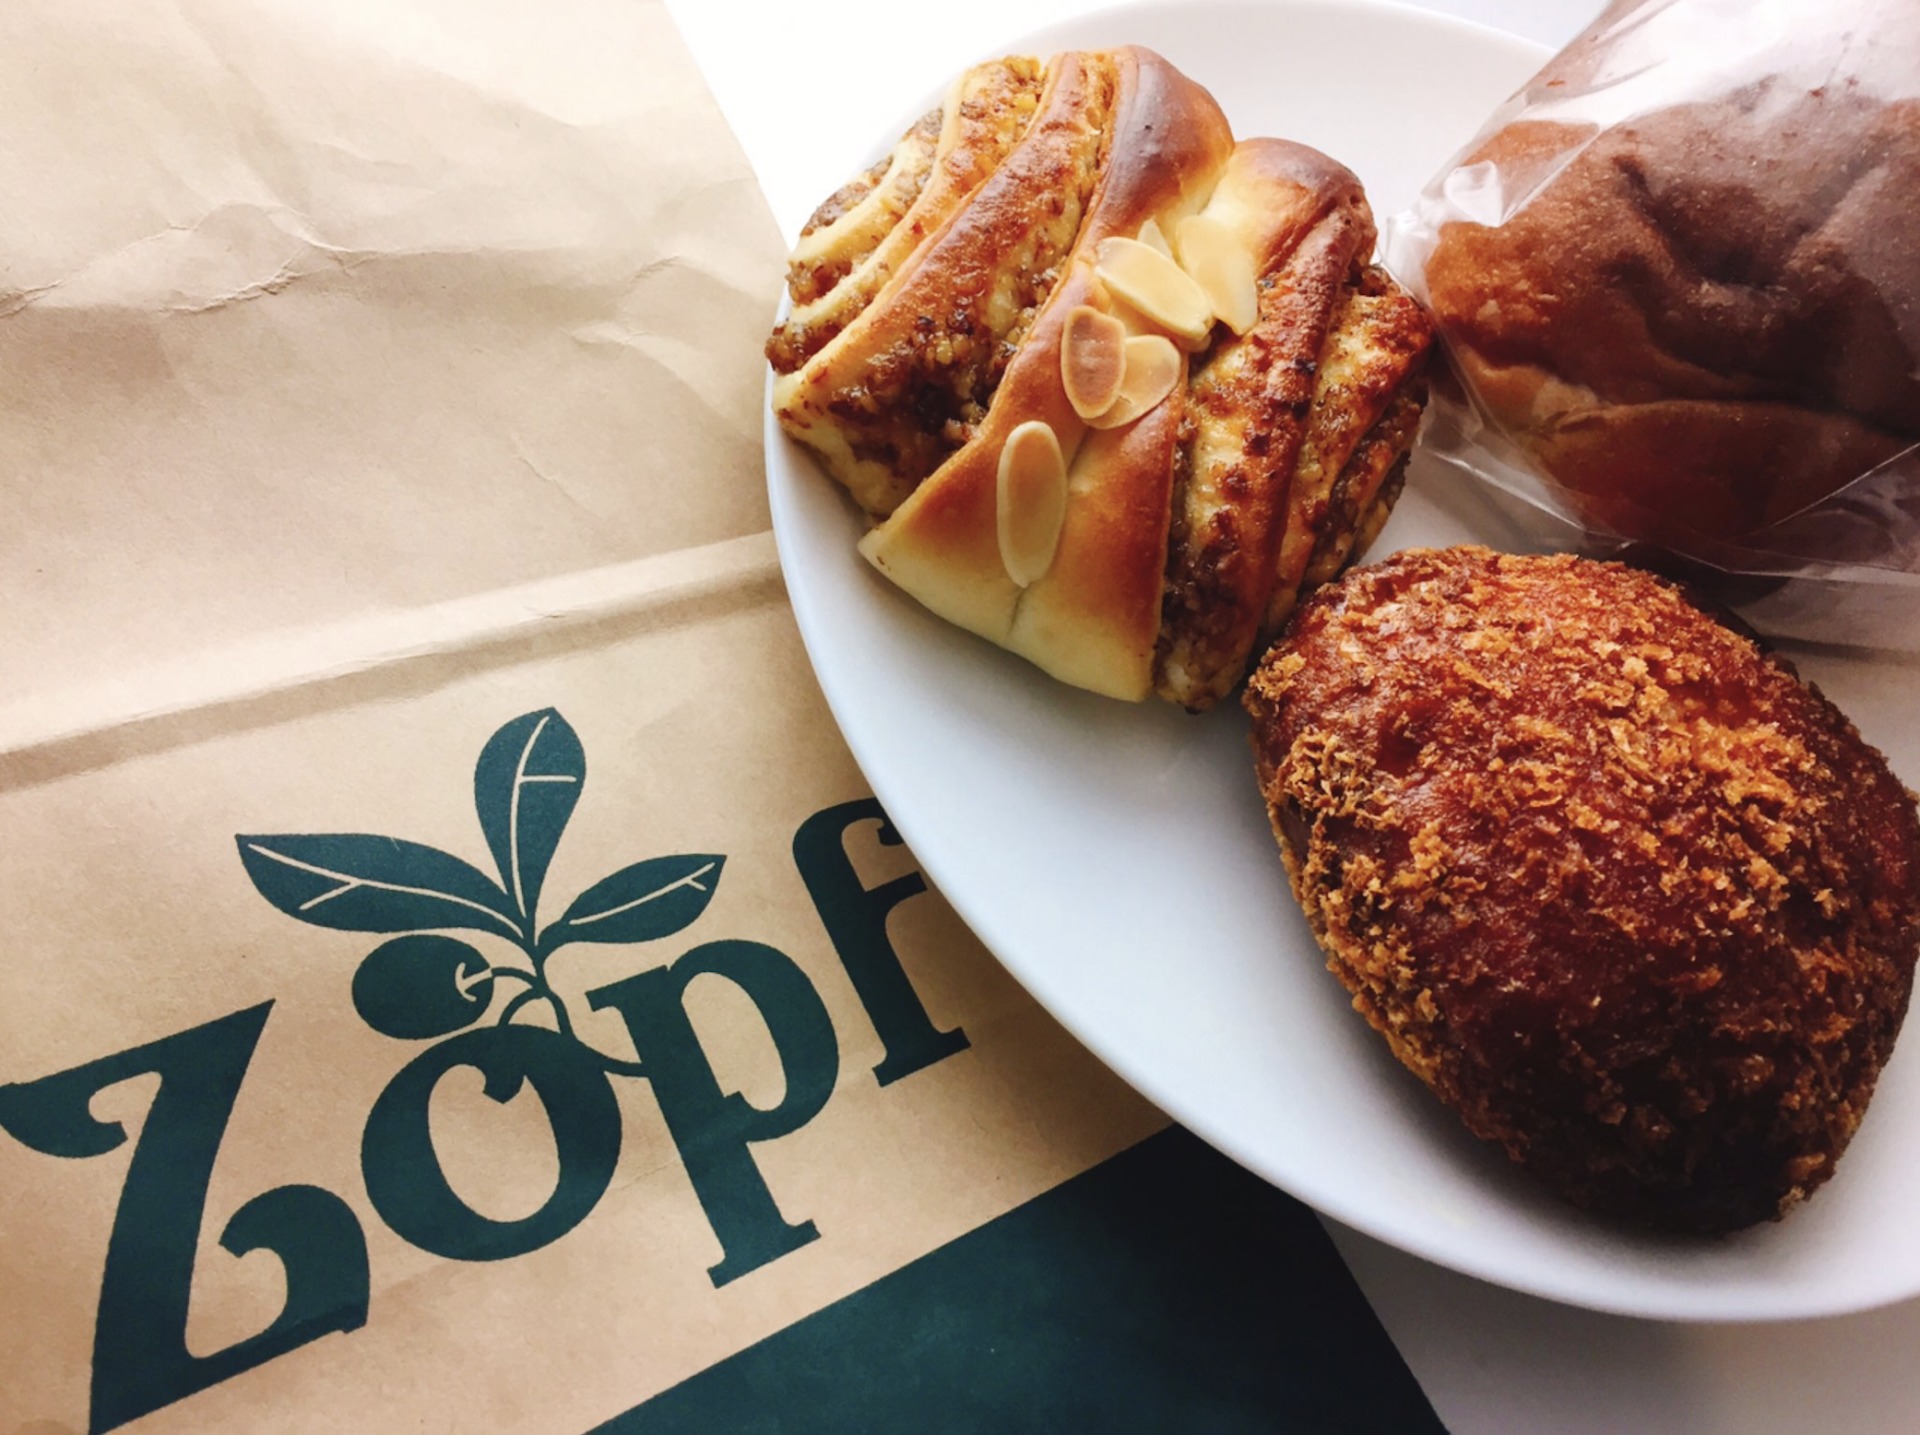 『Zopf』のカレーパン